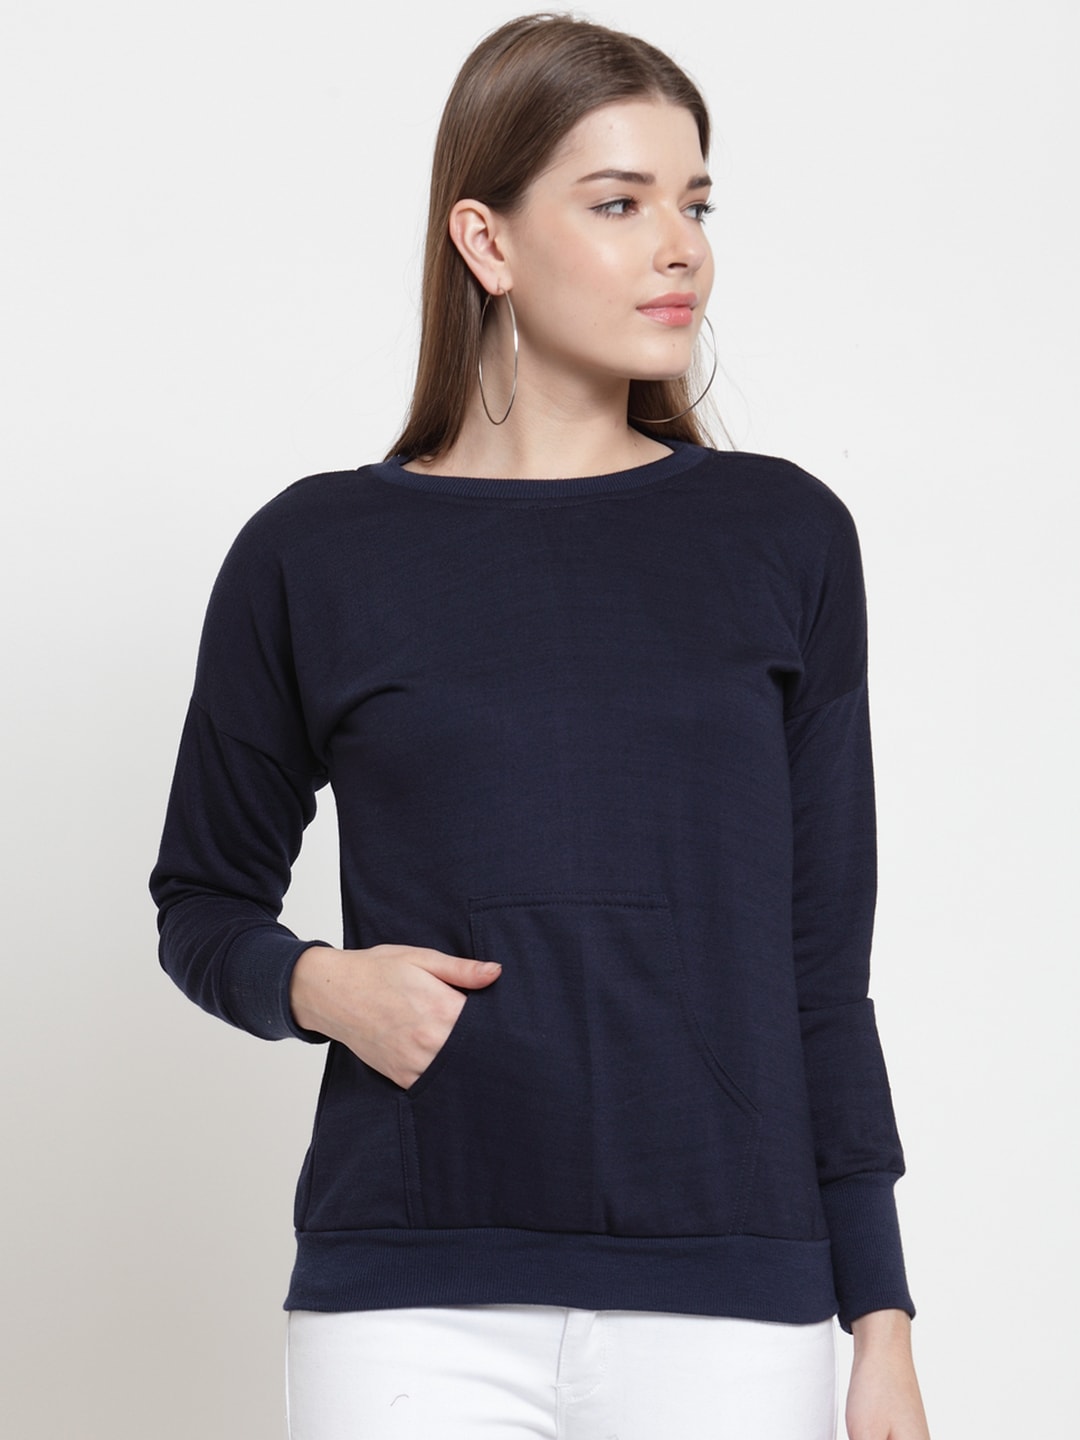 Belle Fille Women Navy Blue Solid Sweatshirt Price in India